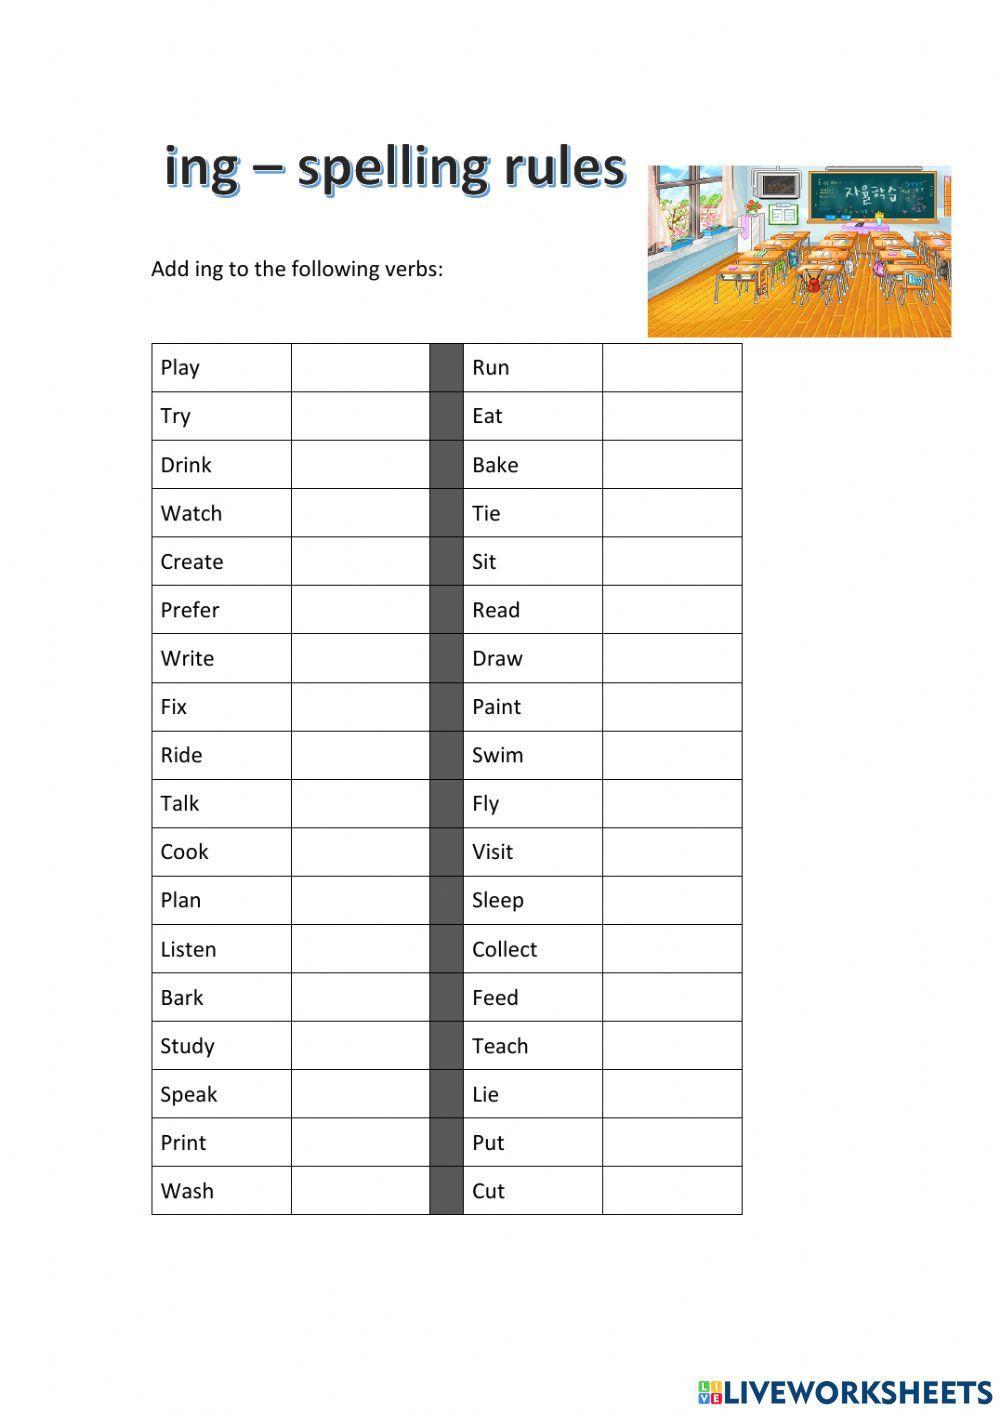 Ing spelling rules